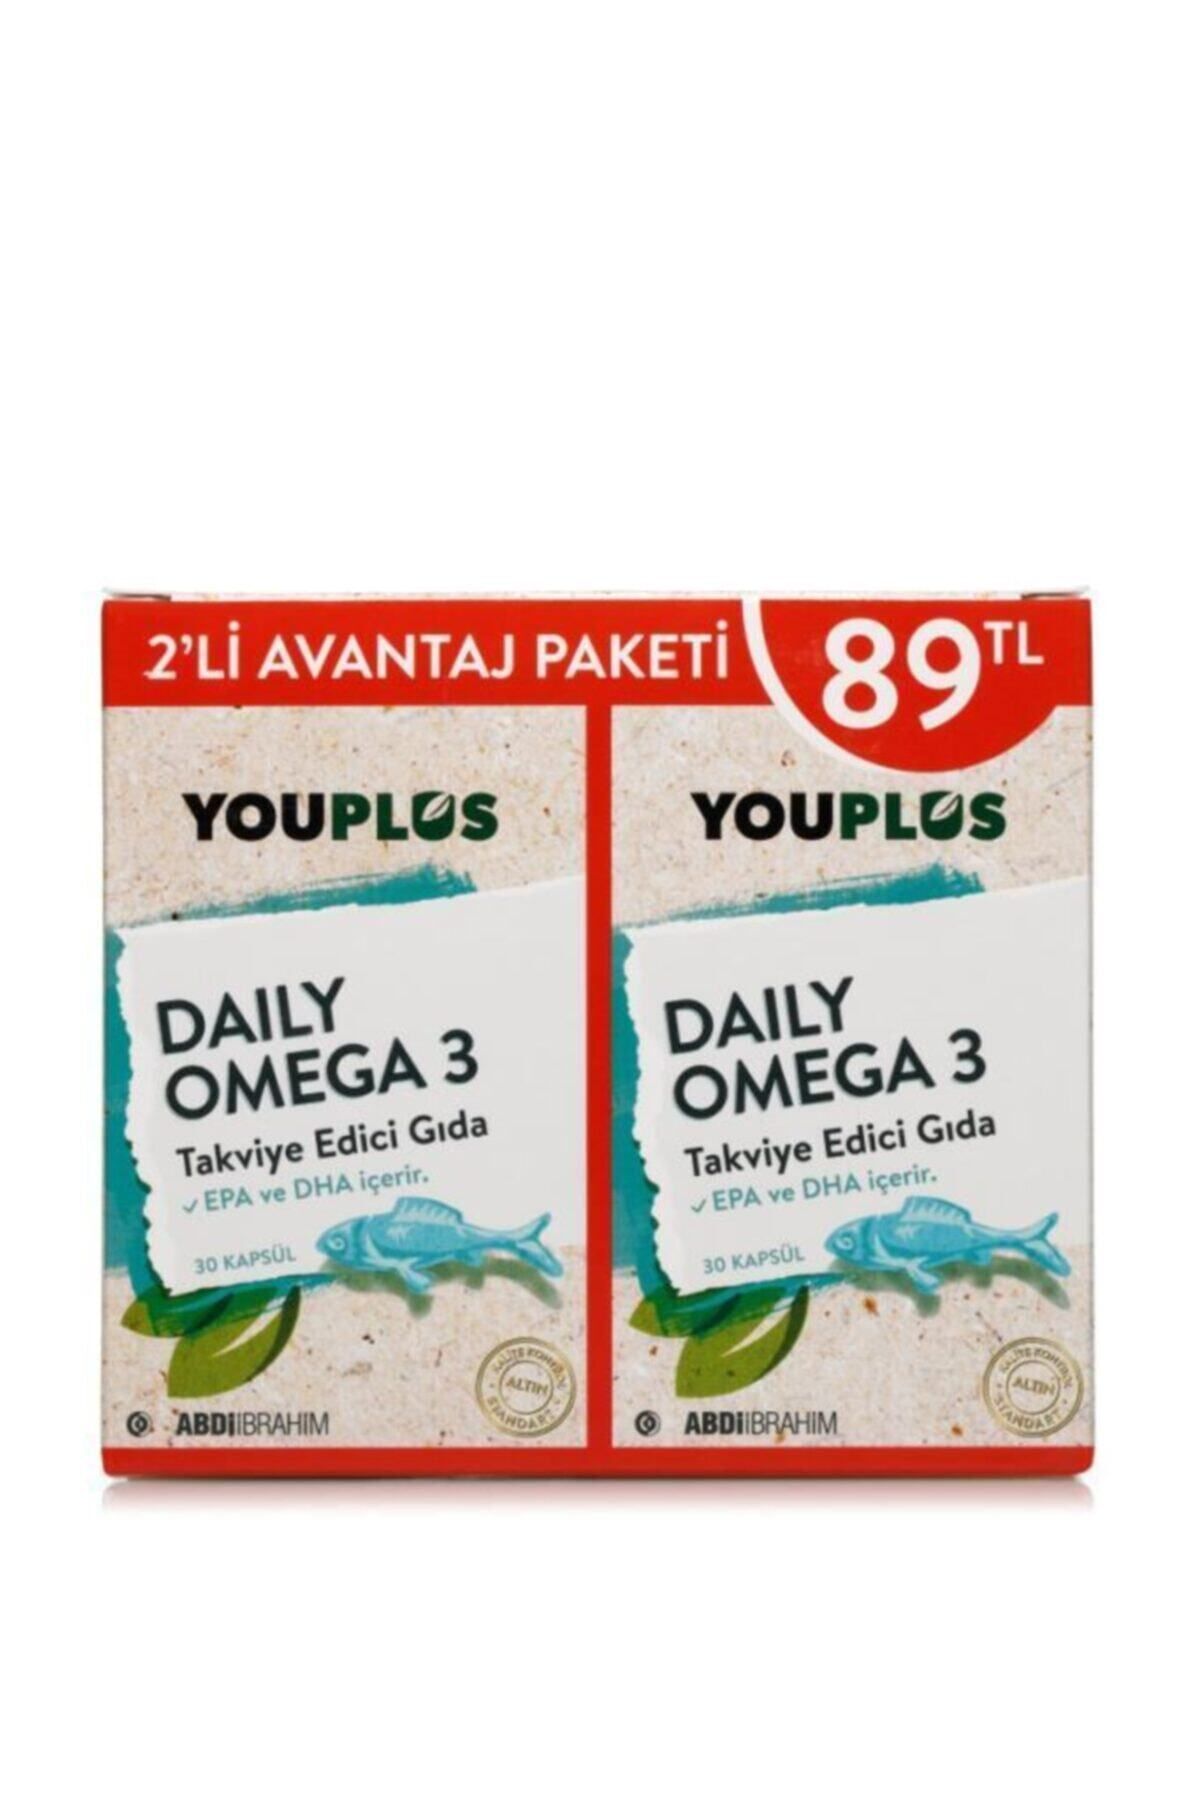 Youplus Daily Omega 3 30 Kapsül 2li Paket Yeni Ürün